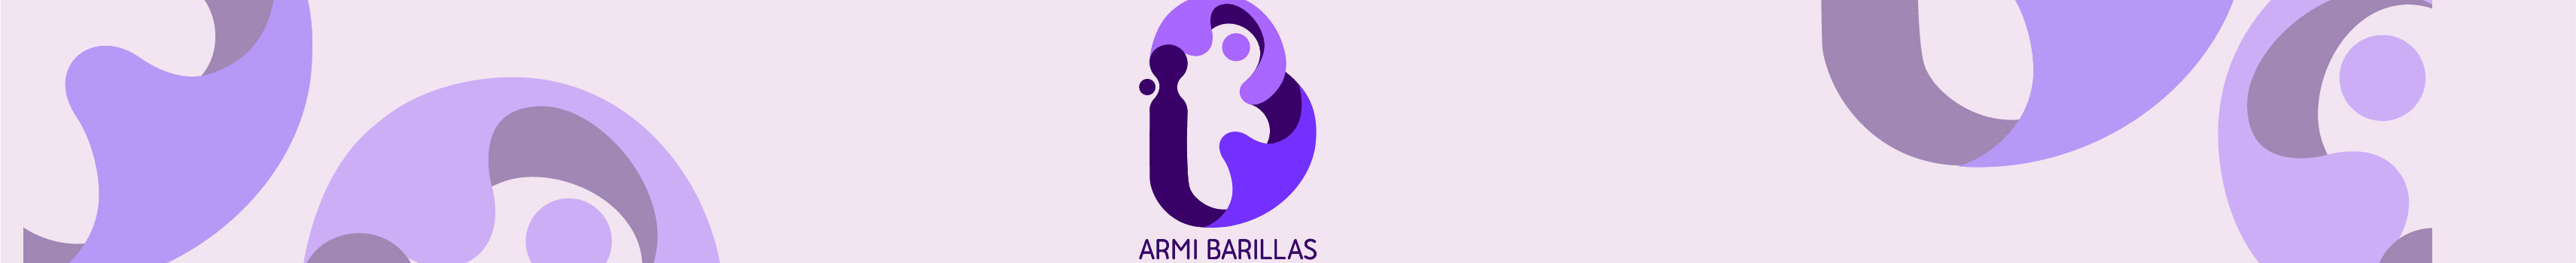 Armi Barillas profil başlığı